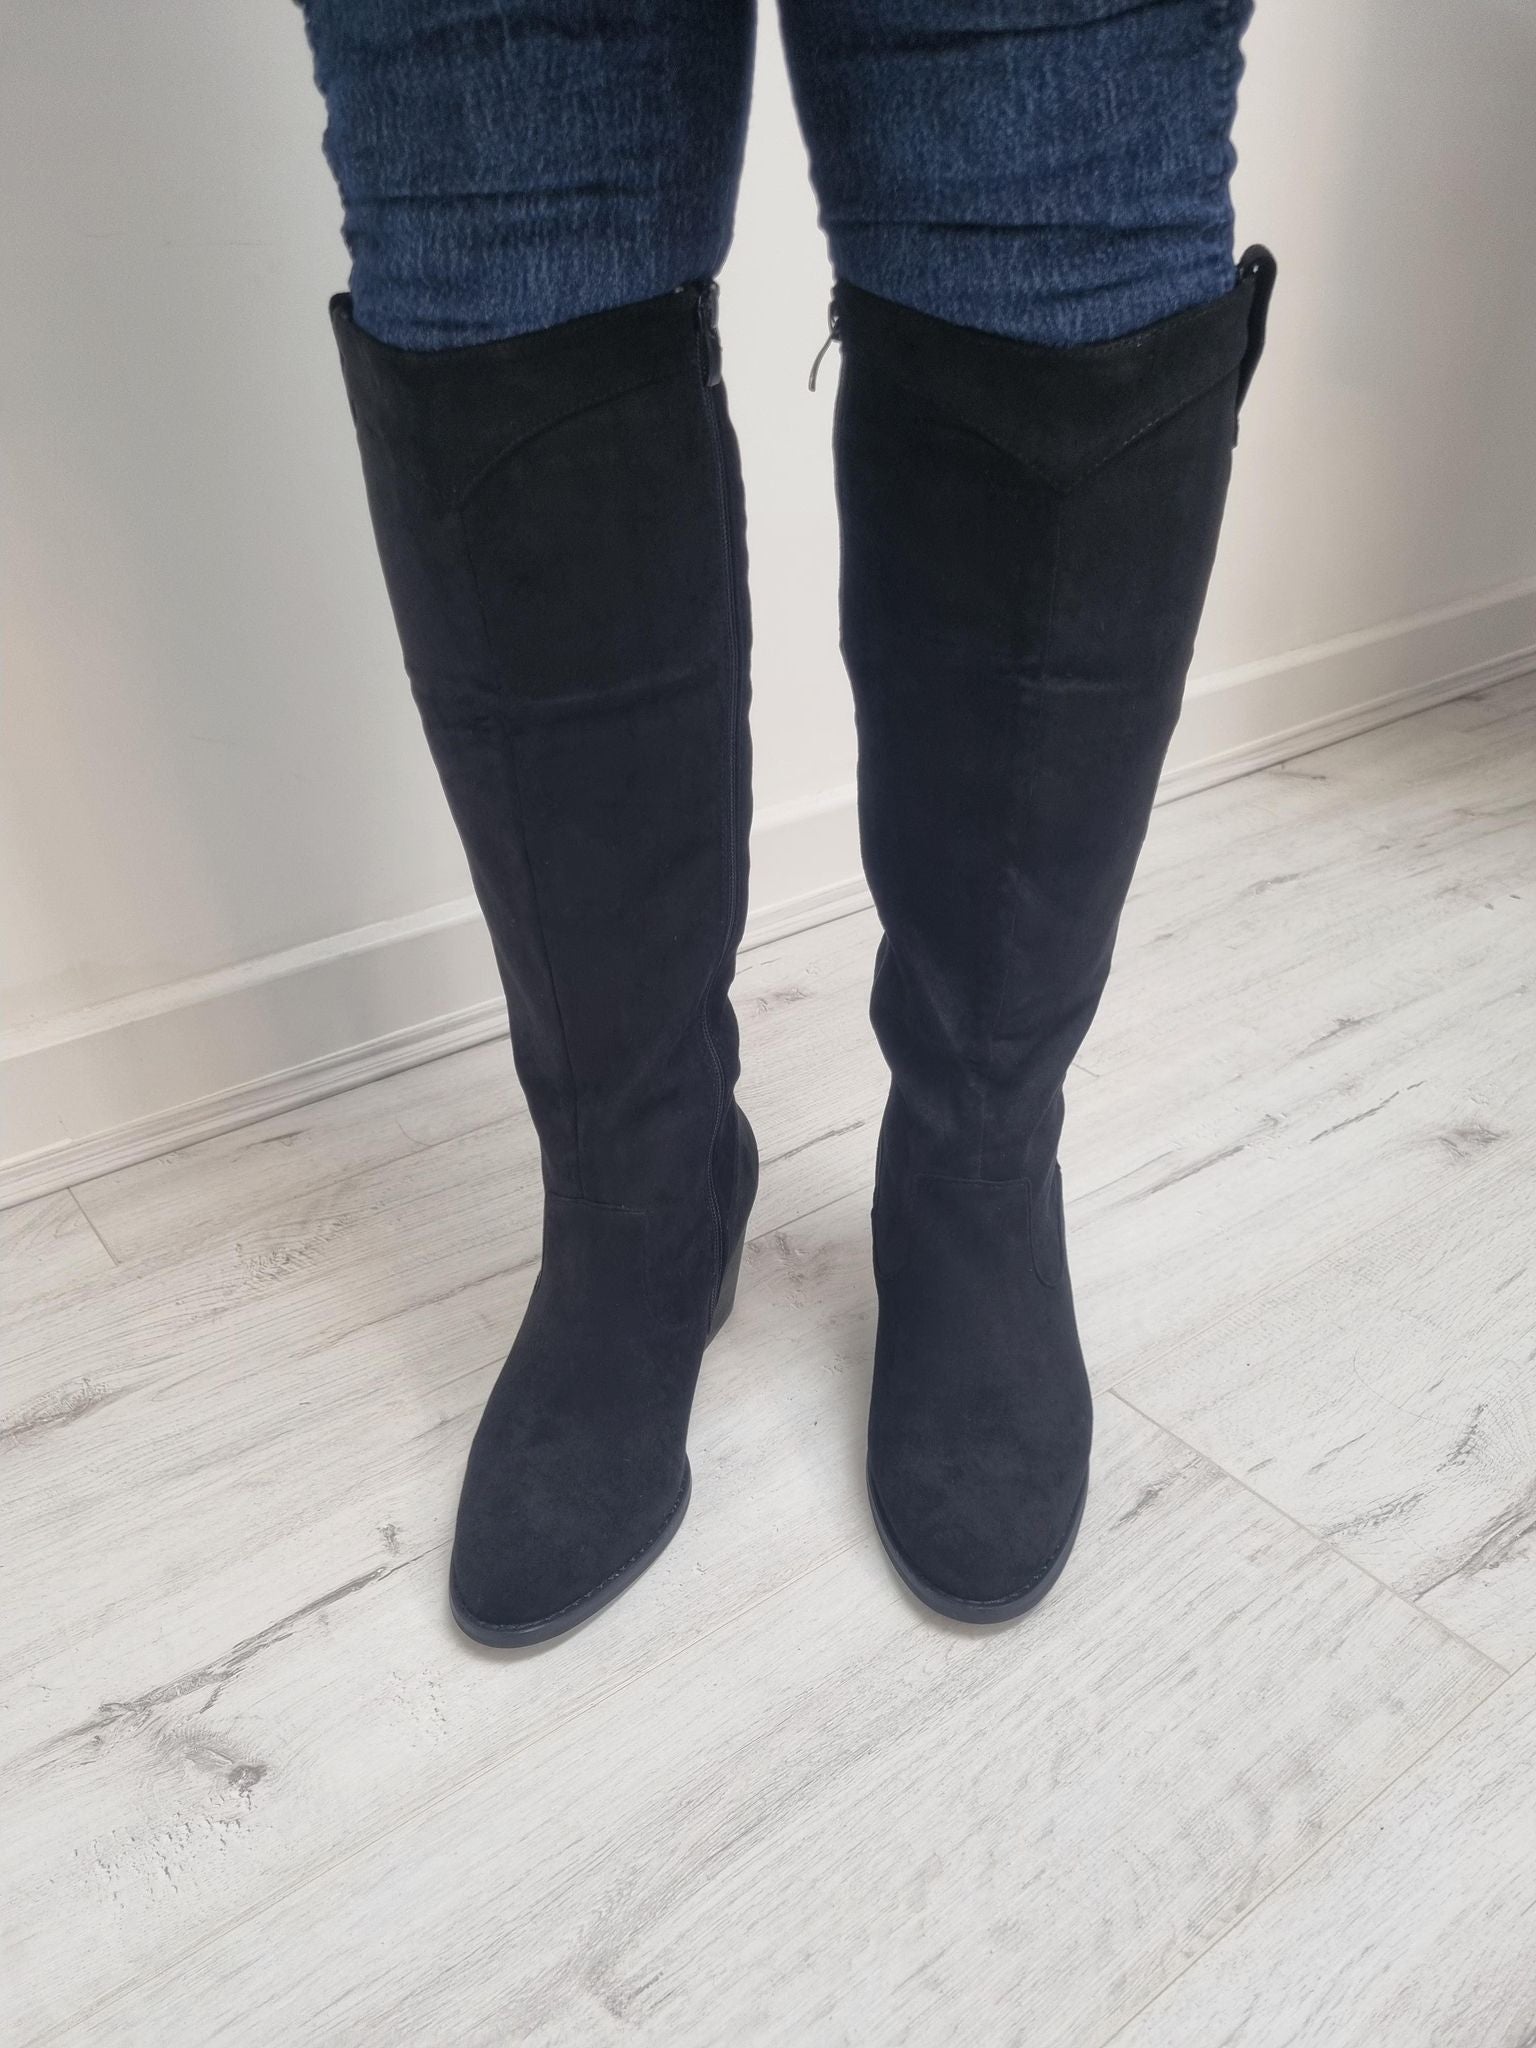 Arizona Knee High Boots - Black